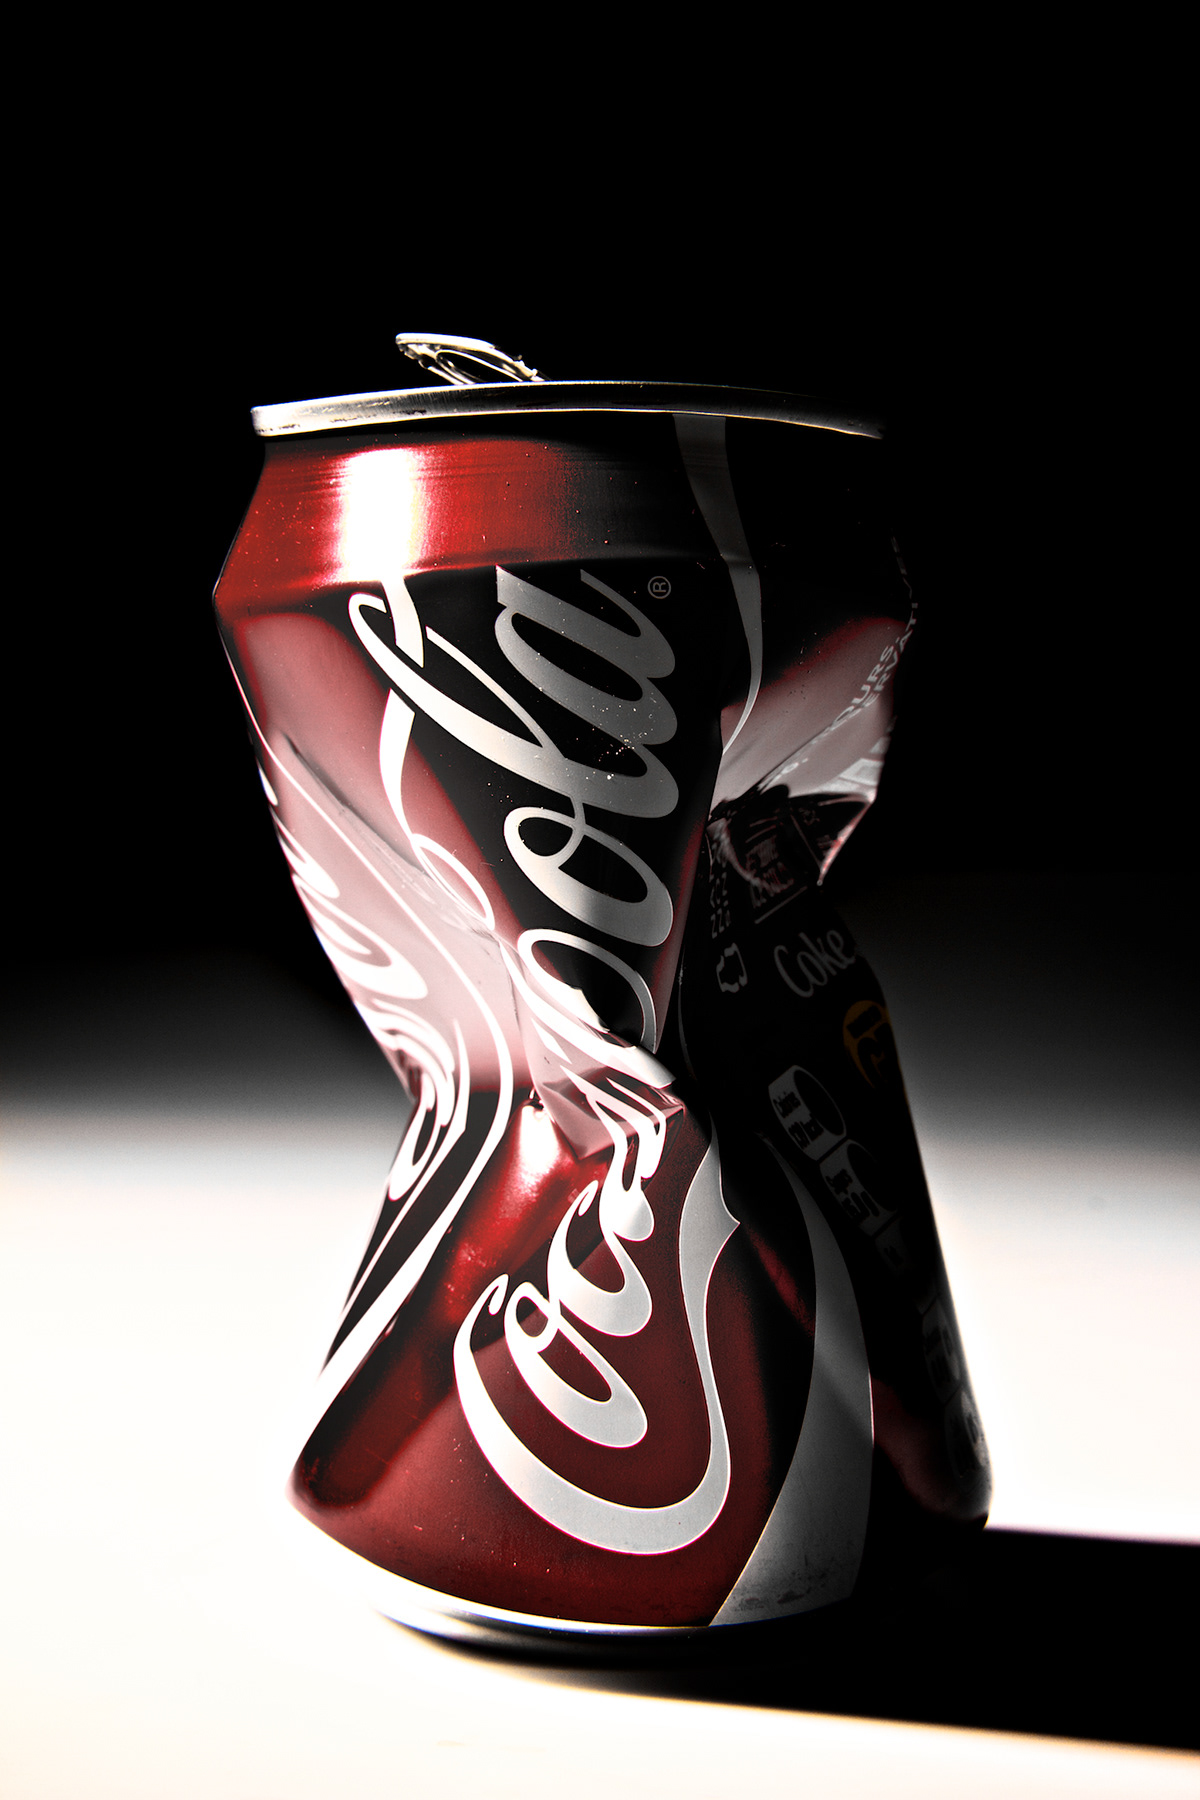 Coffee trash cups lids soda cans coke diet found digital red medium format